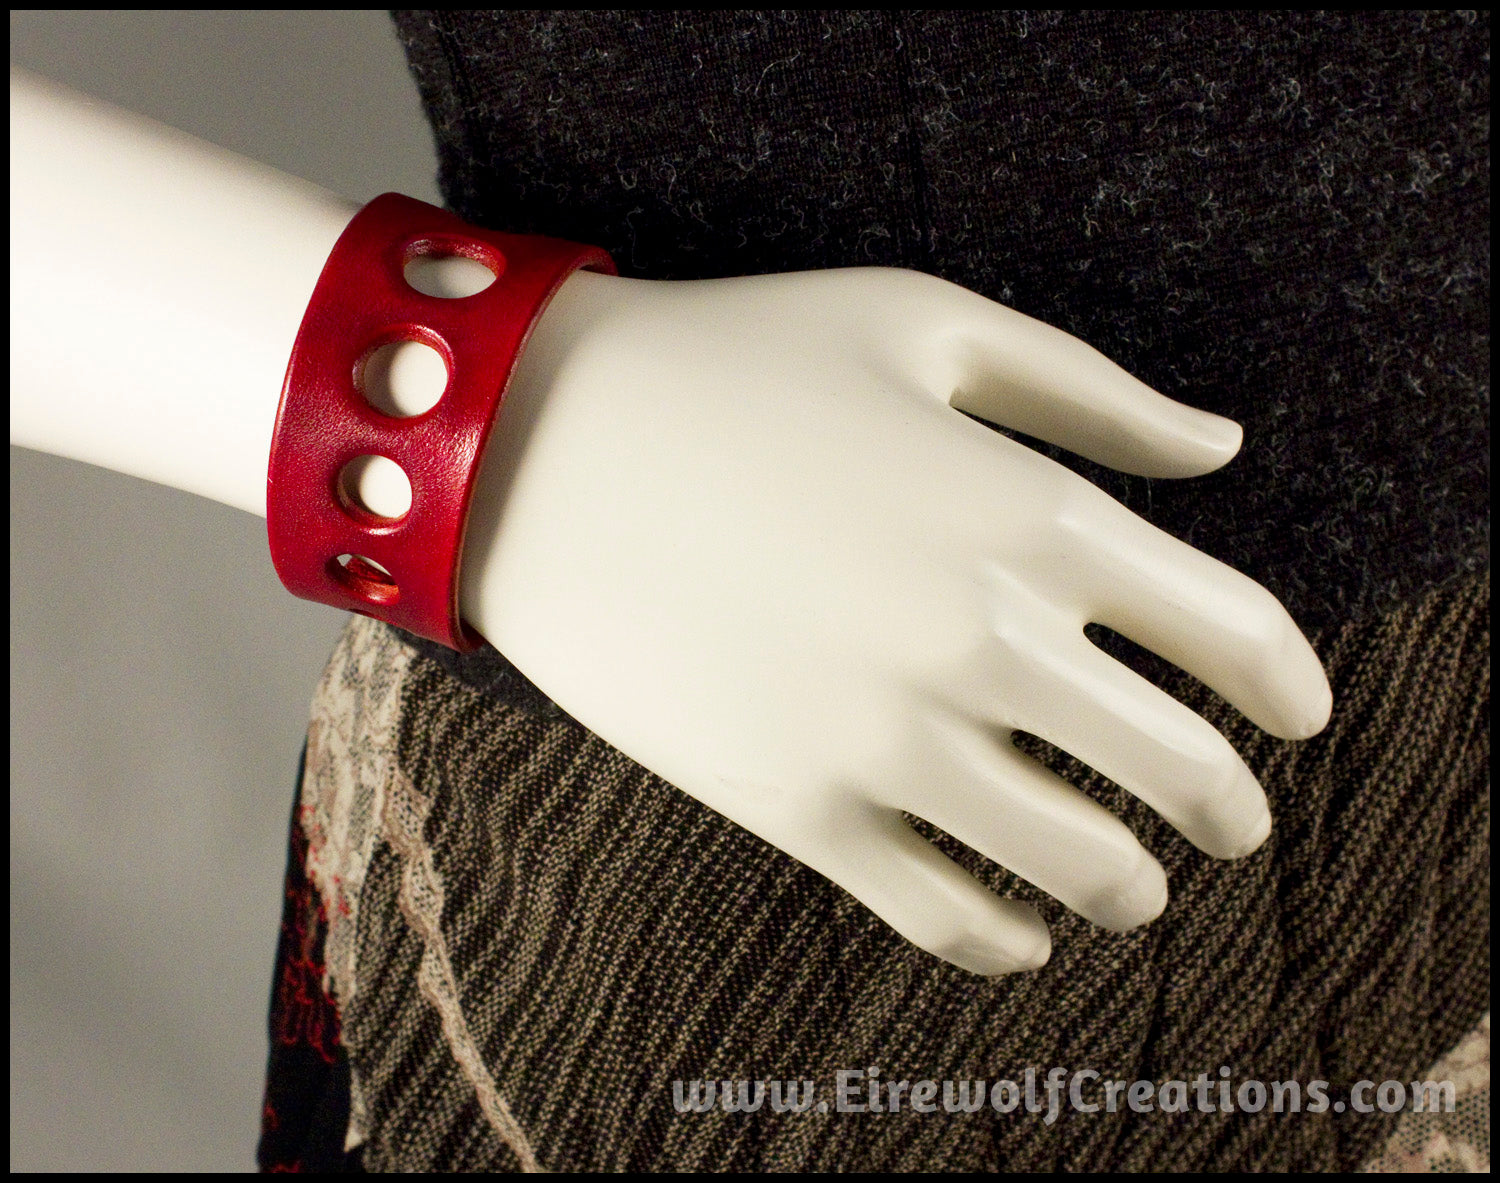 leather bracelet red